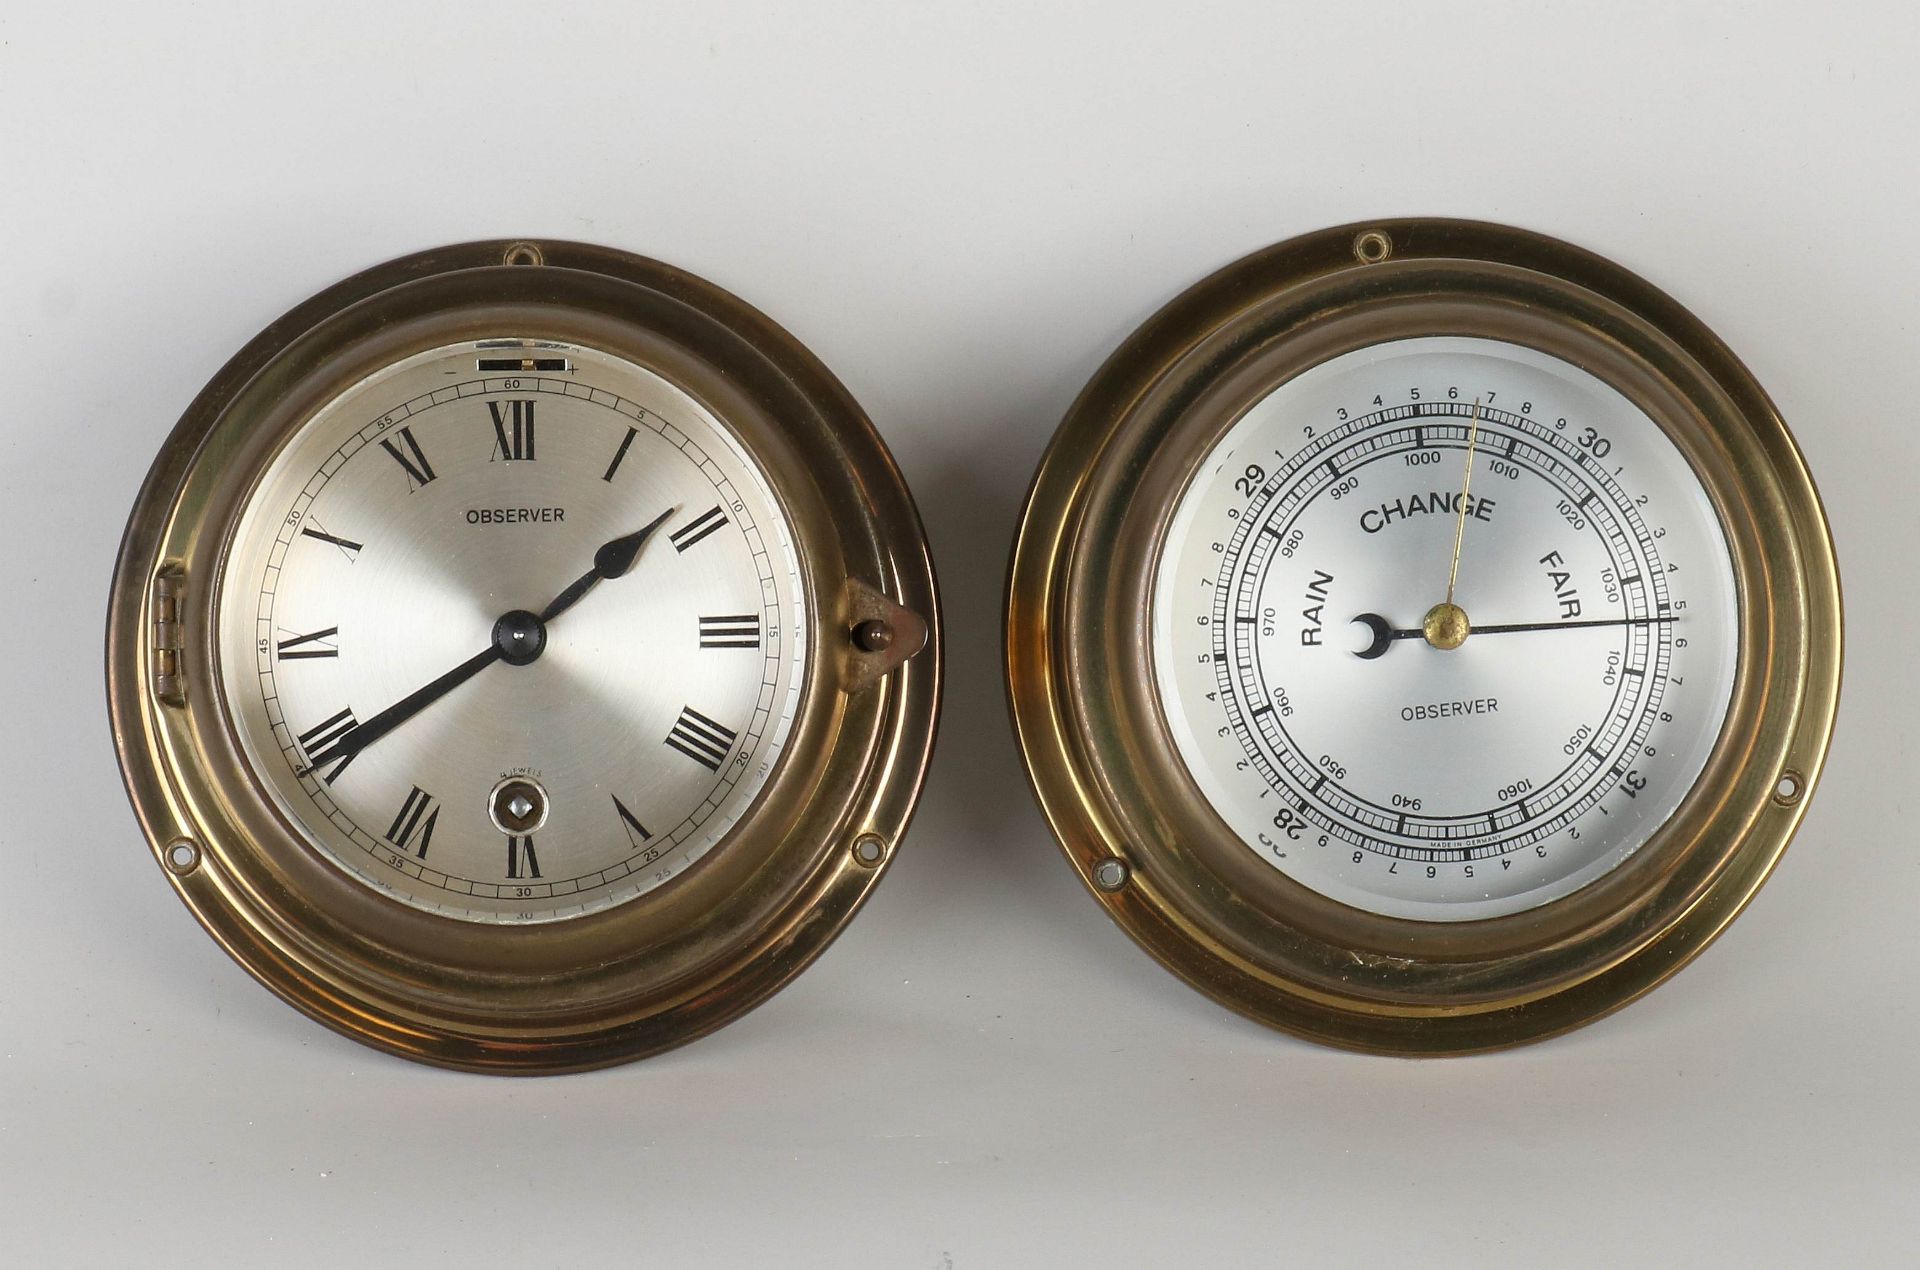 Old brass Observer ship's clock + barometer